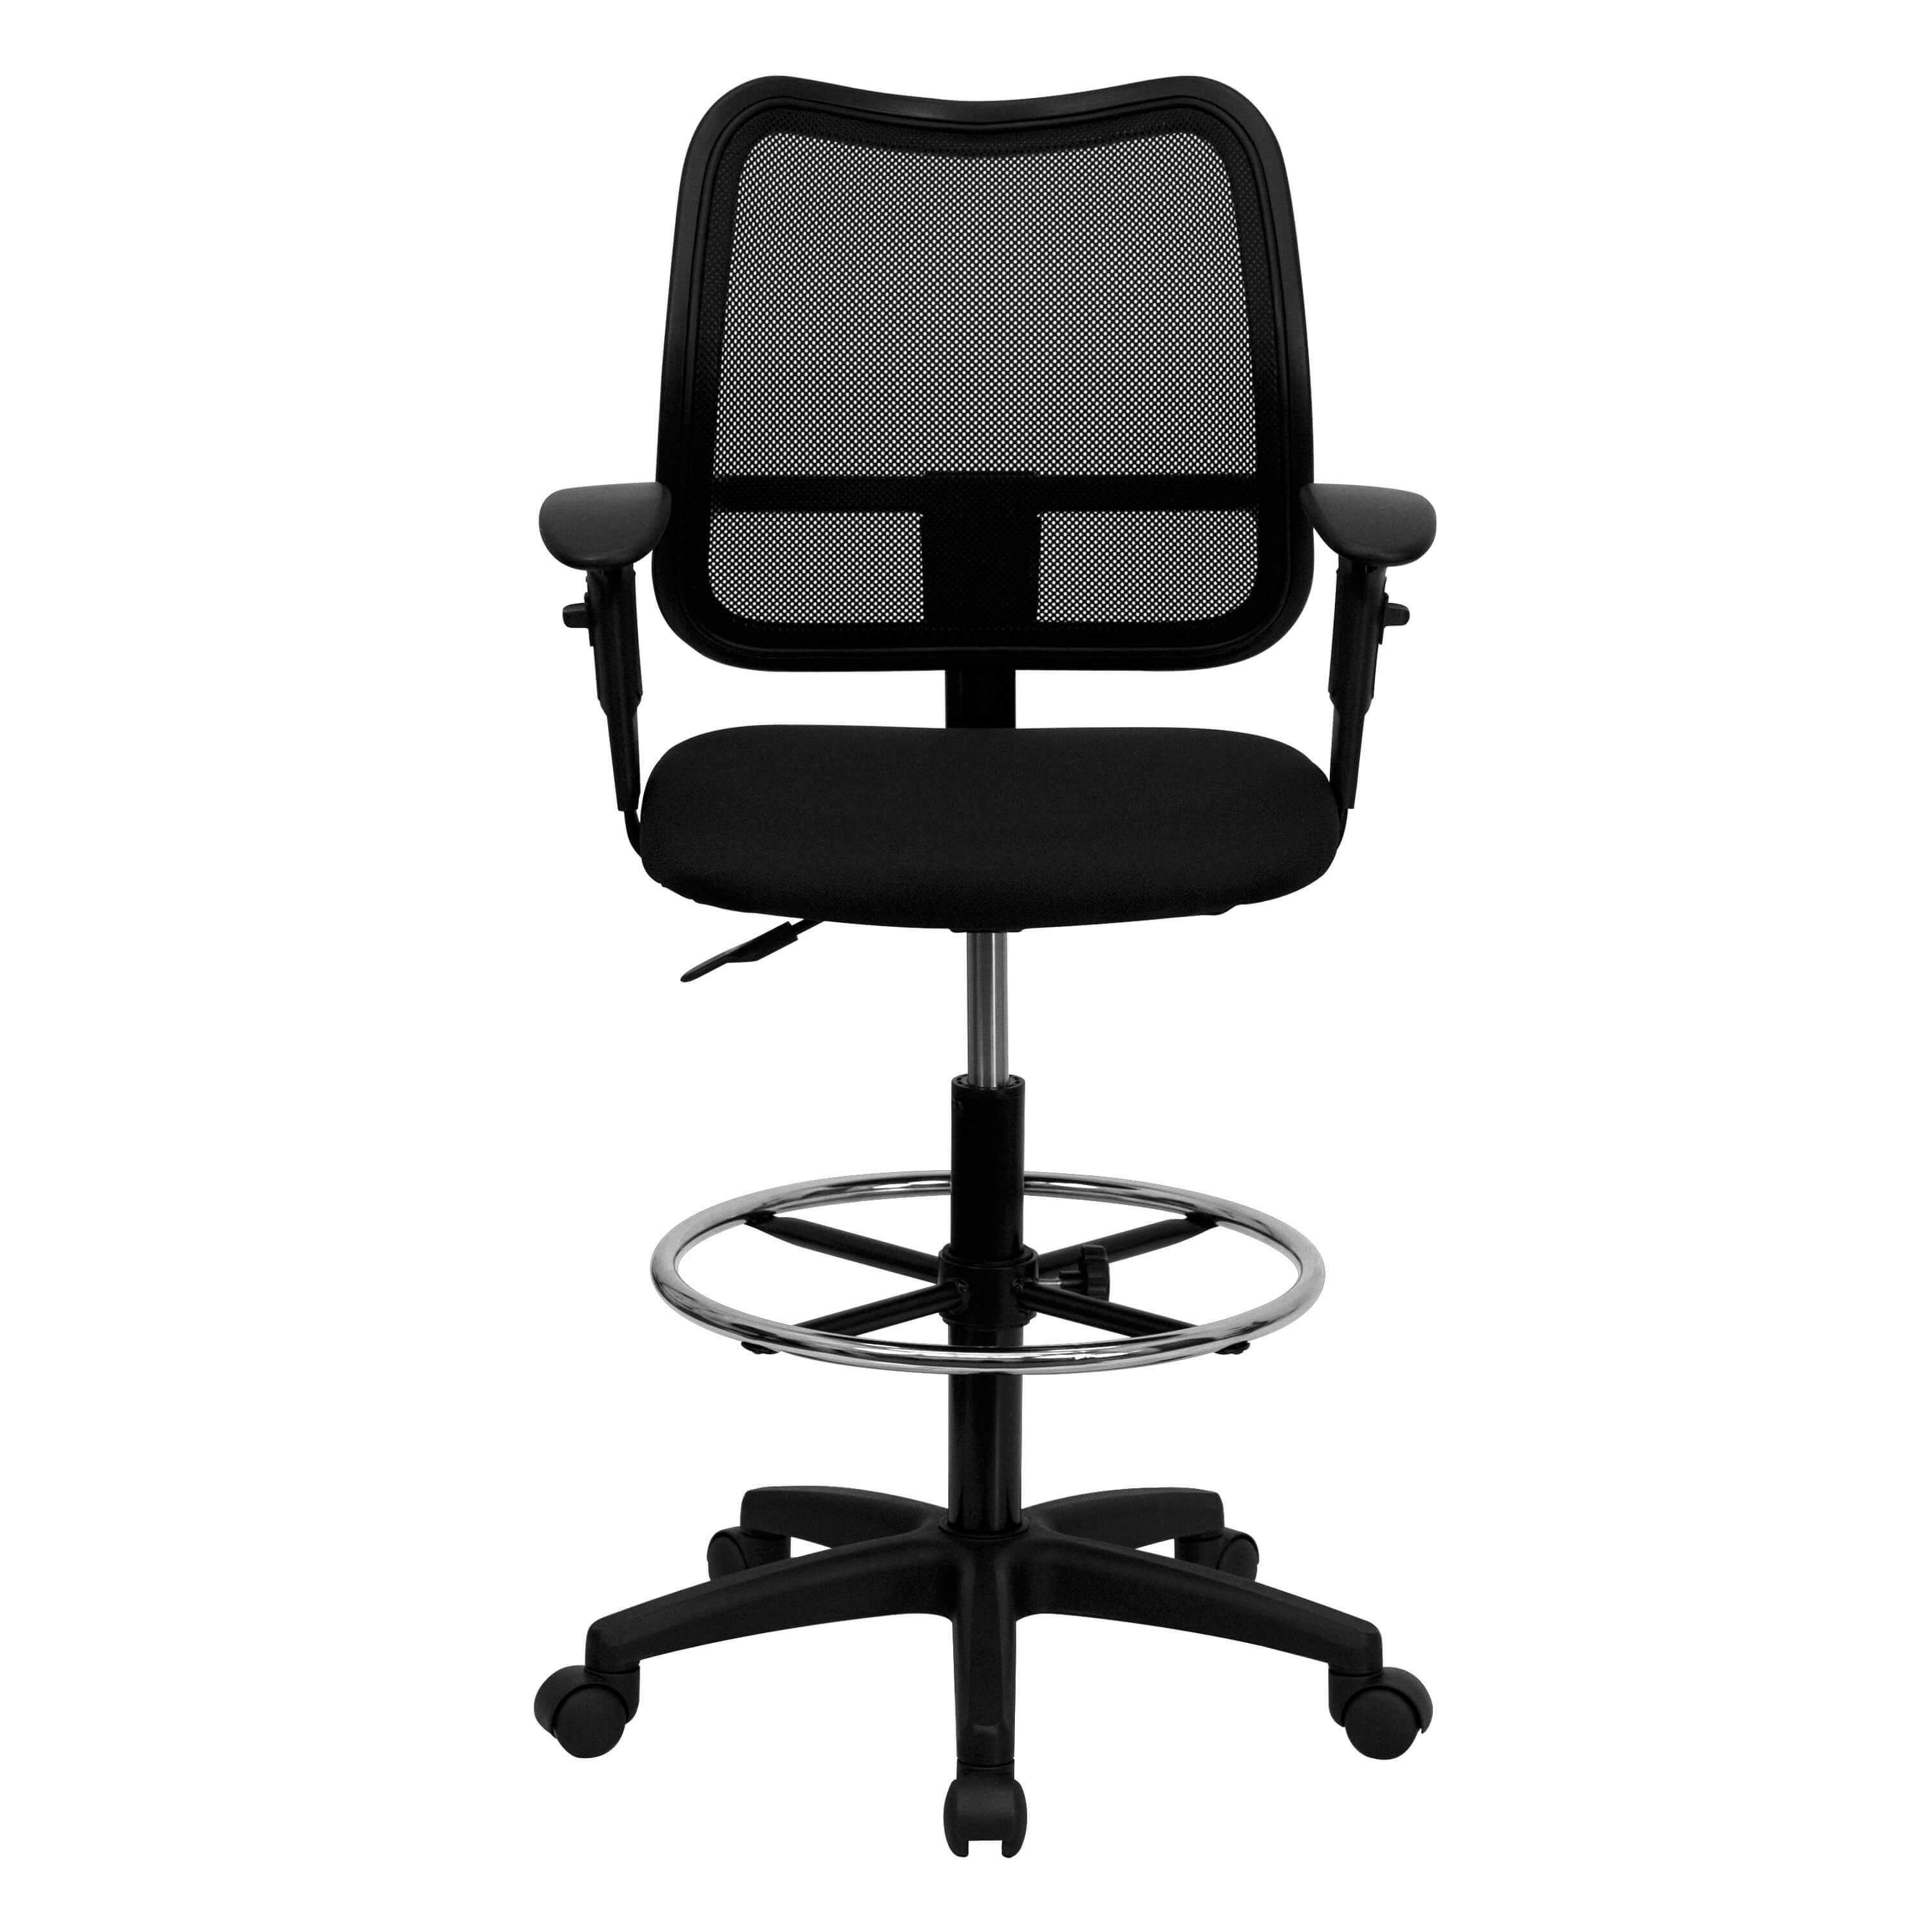 Cool desk chairs CUB WL A277 BK AD GG FLA